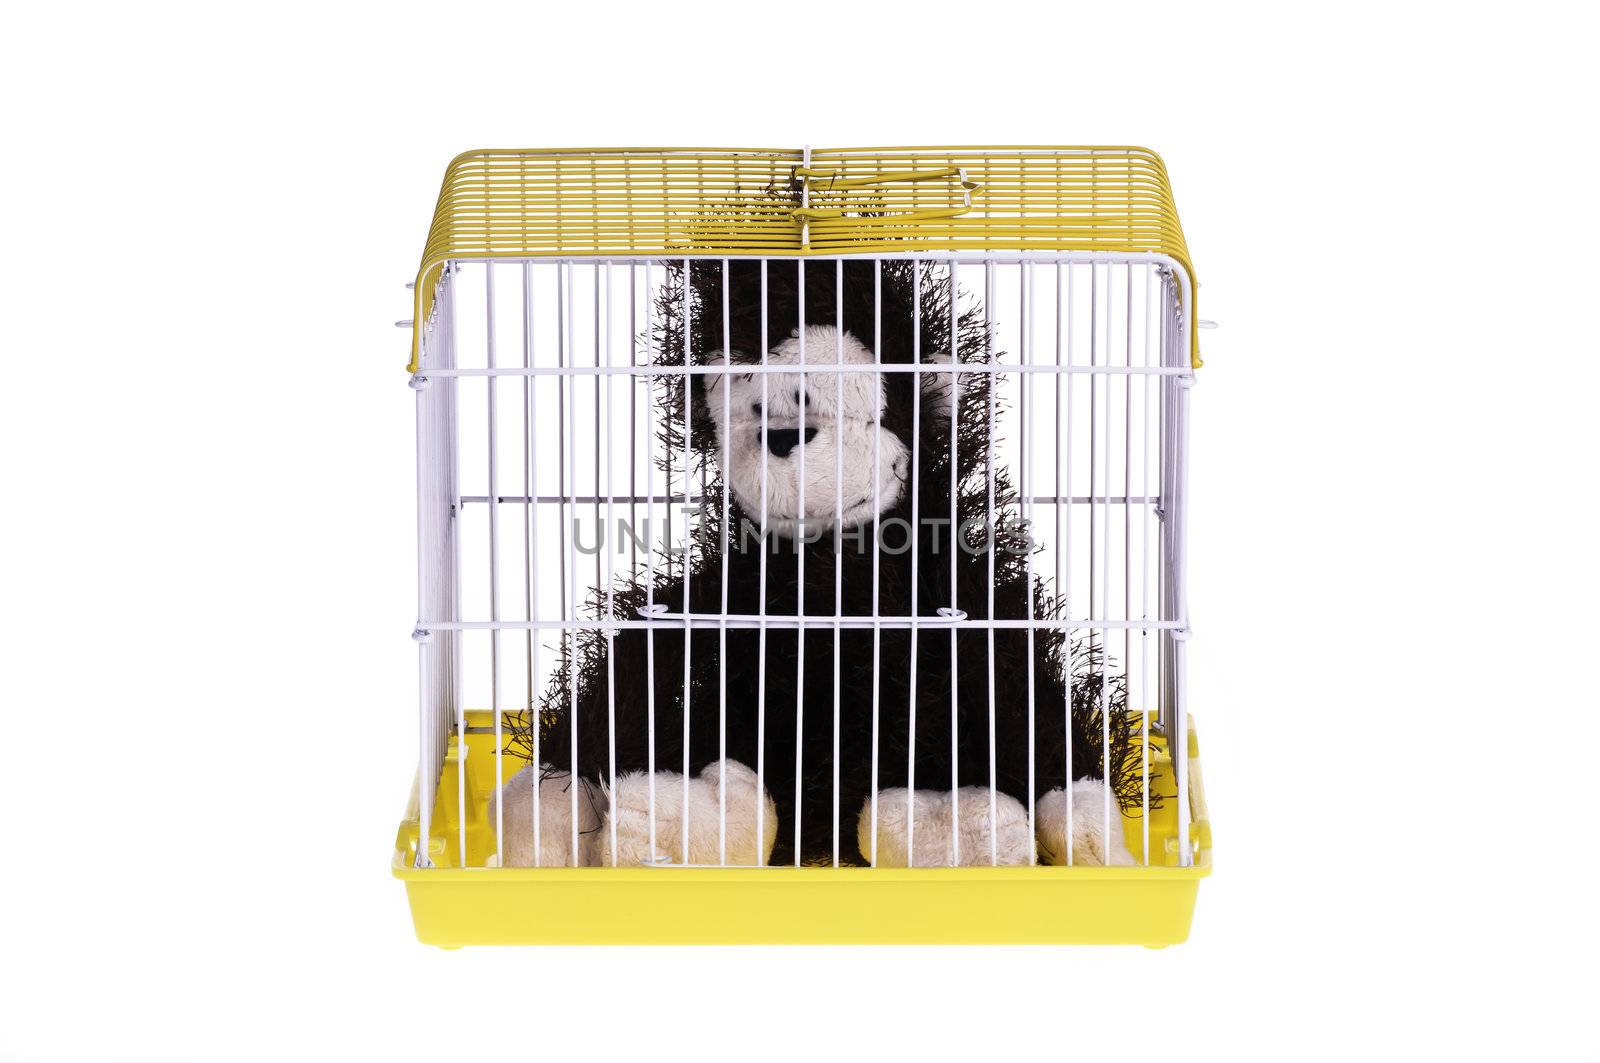 A black monkey in the golden cage, it looks like feeling depressed